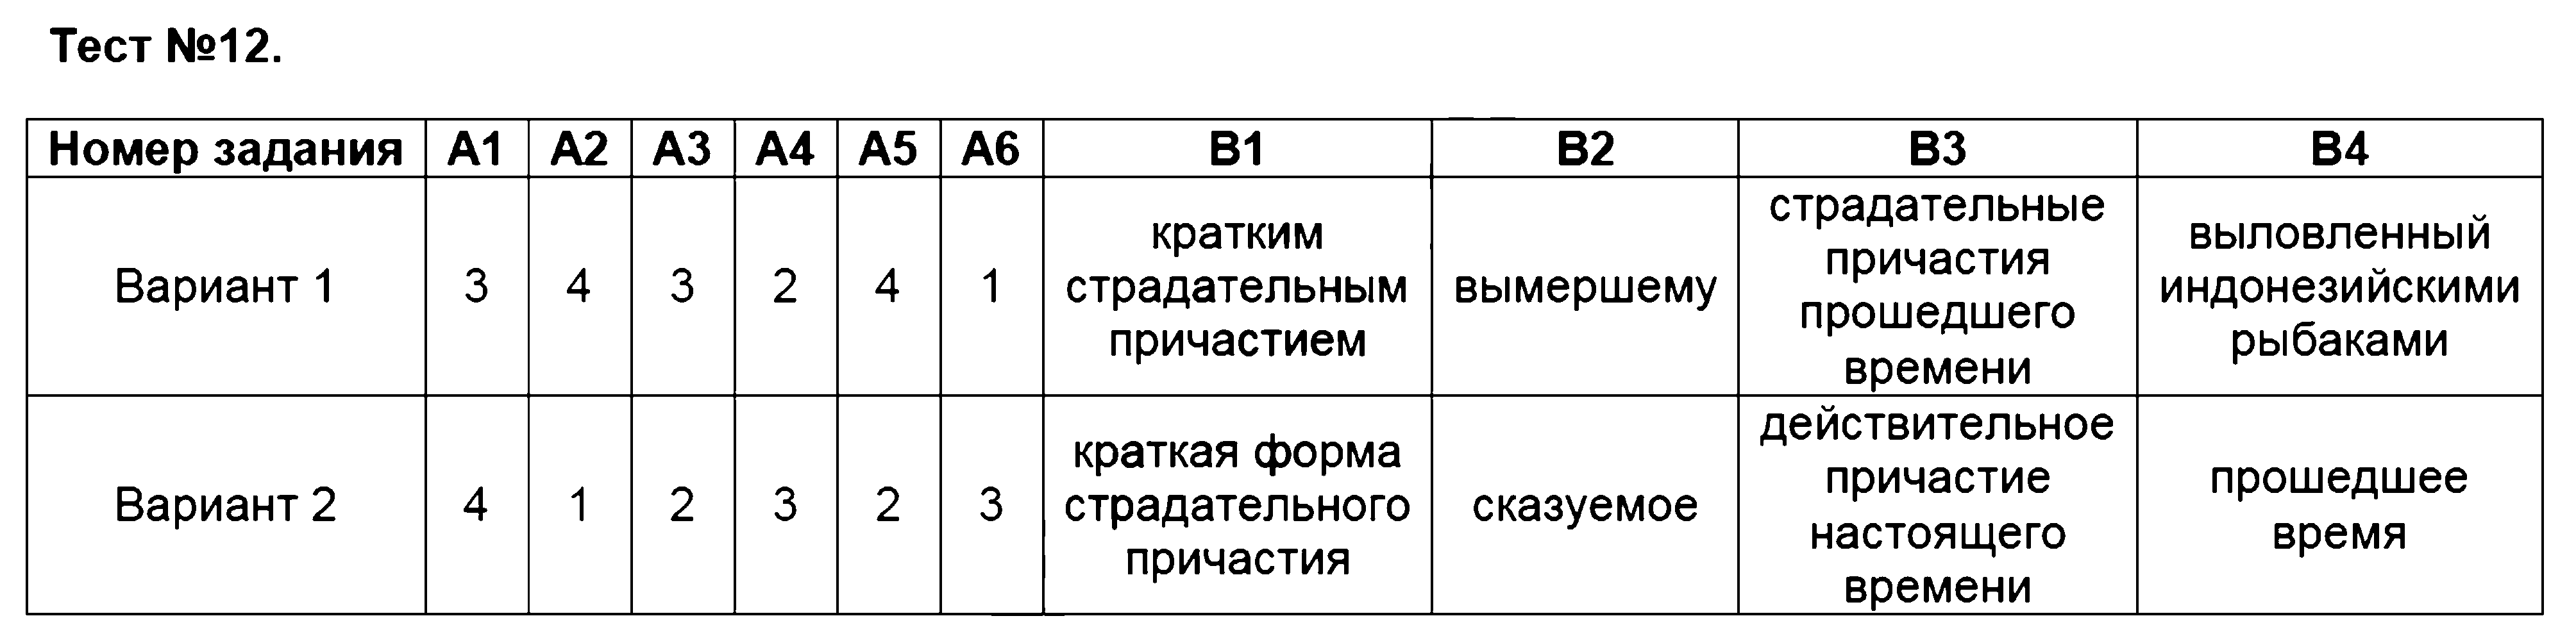 ГДЗ Русский язык 7 класс - Тест 12